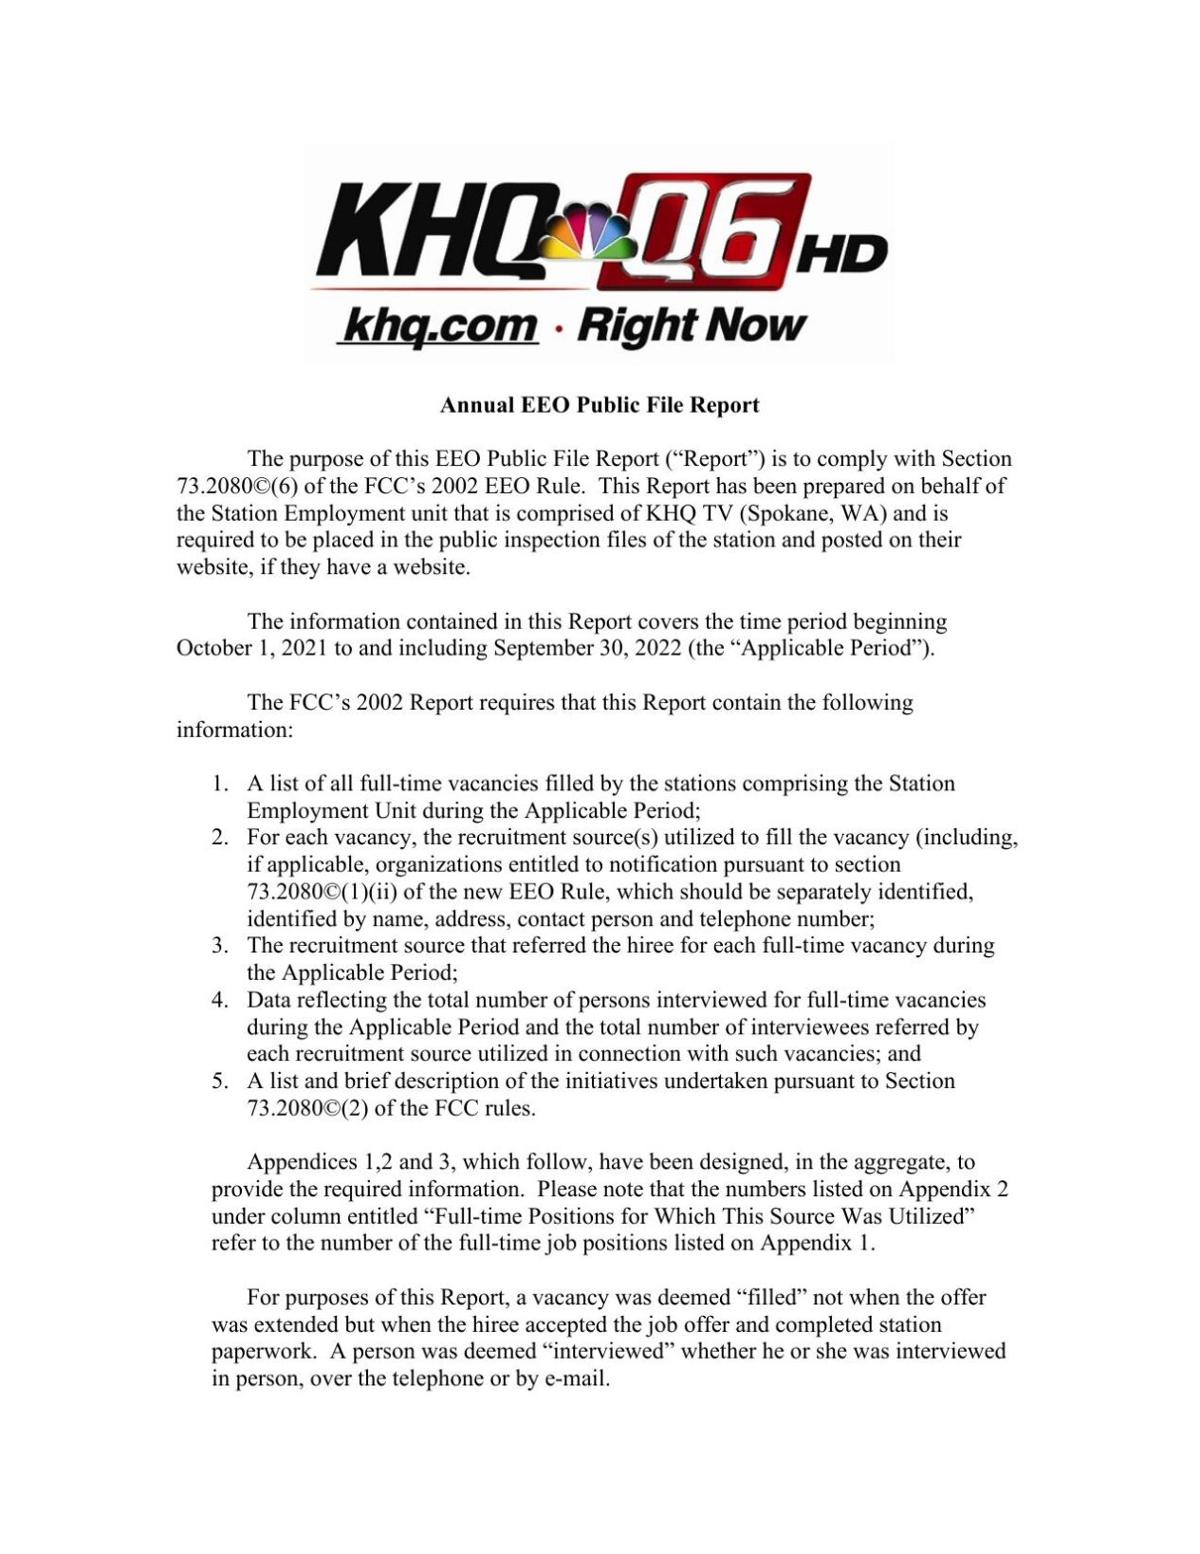 KHQ Annual EEO Public File Report 2022